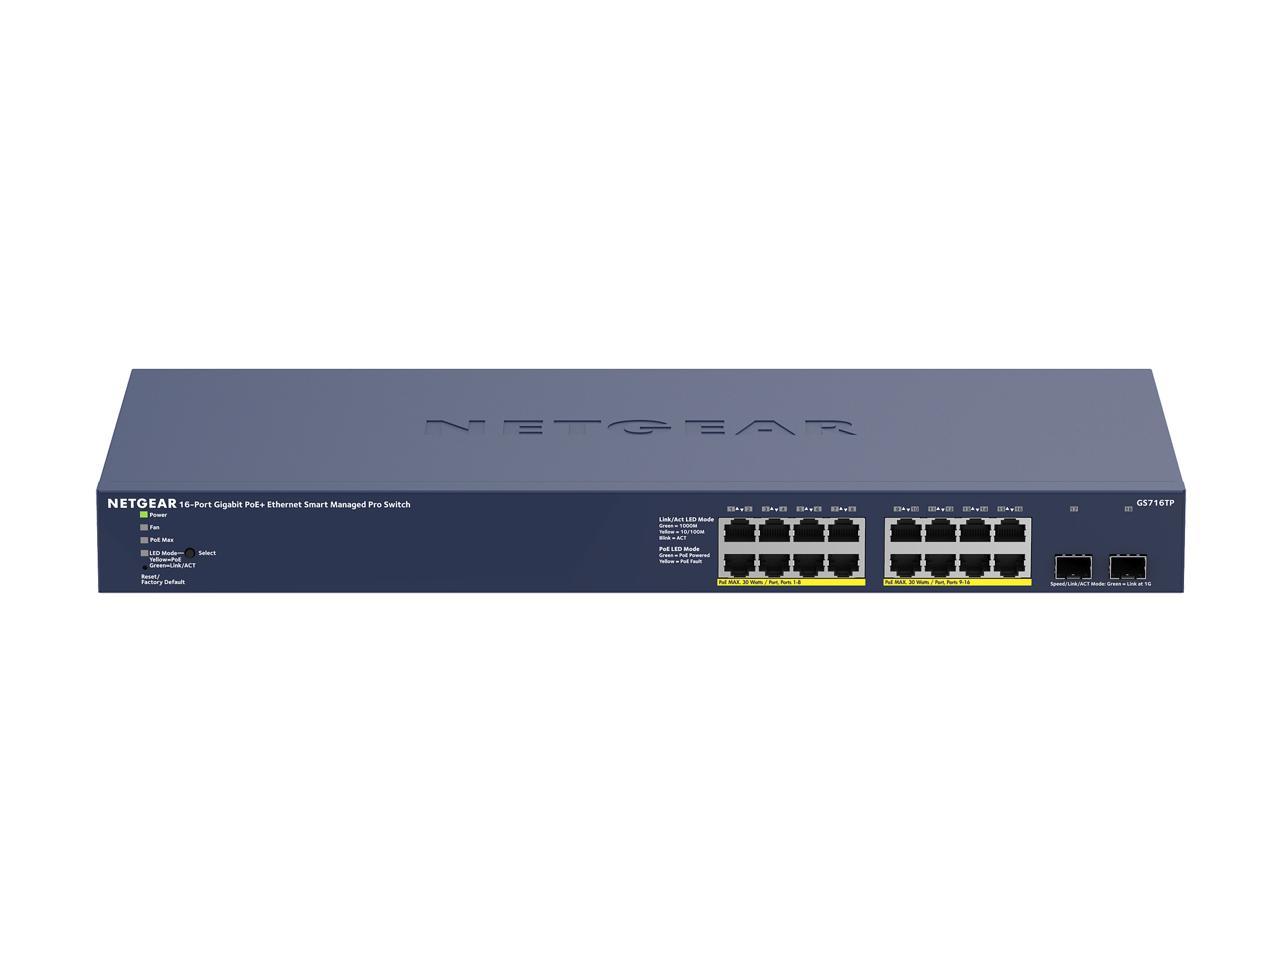 NETGEAR 16-port Gigabit Ethernet PoE+ Smart Switch with 2 SFP Ports and Cloud Management (GS716TP)